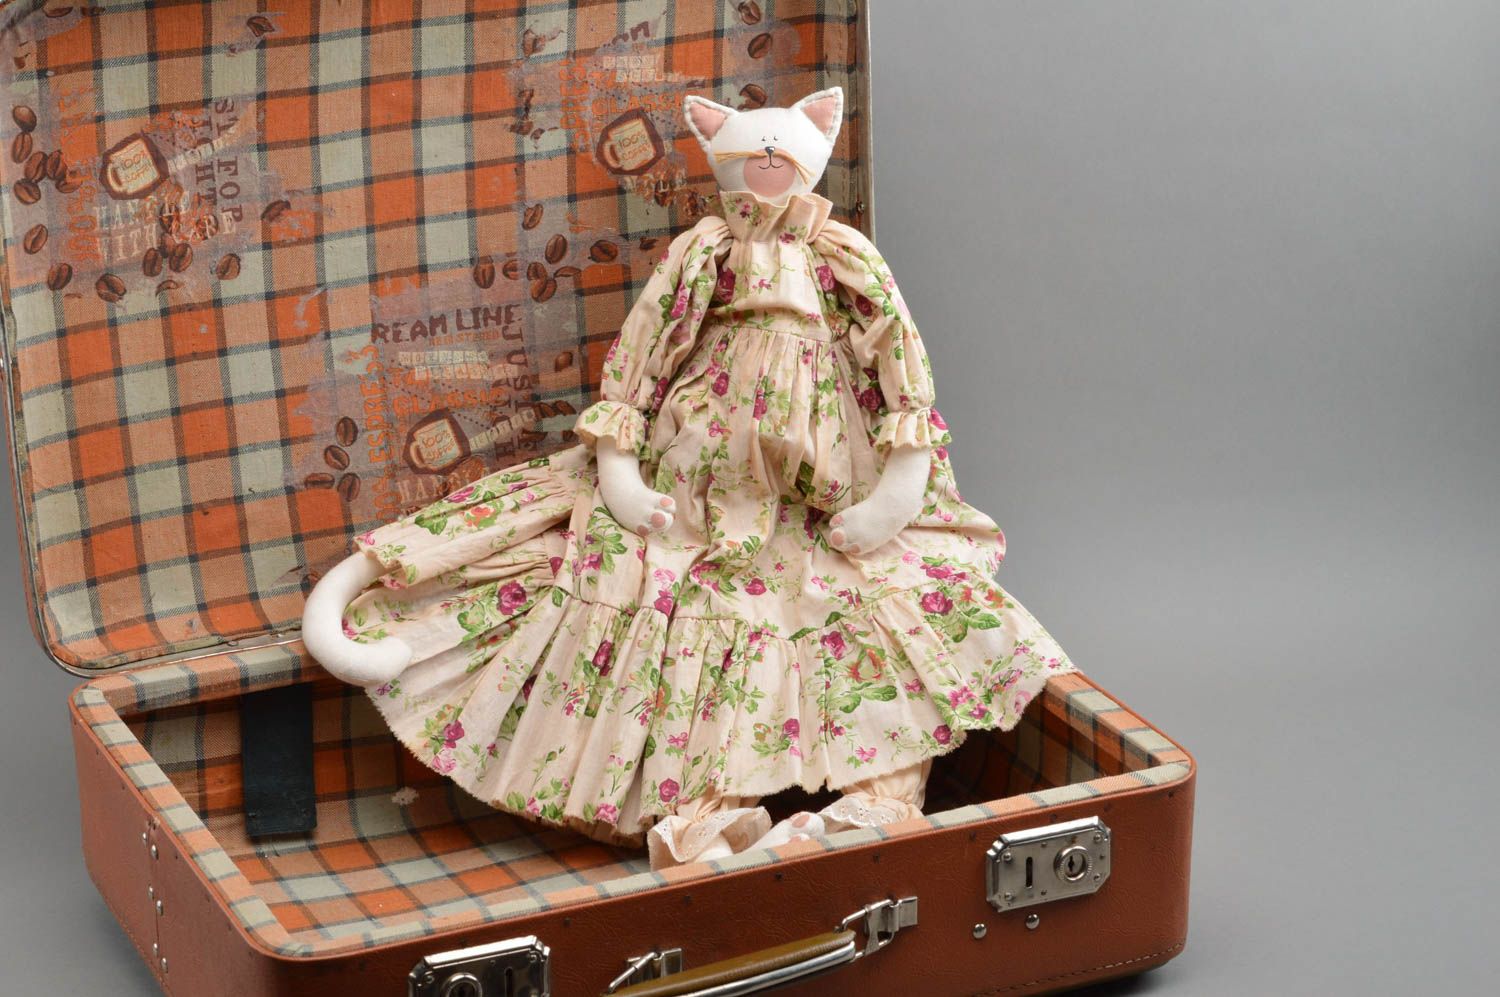 Fabric toy cat white stuffed toy doll in dress interior decor ideas nursery idea photo 1